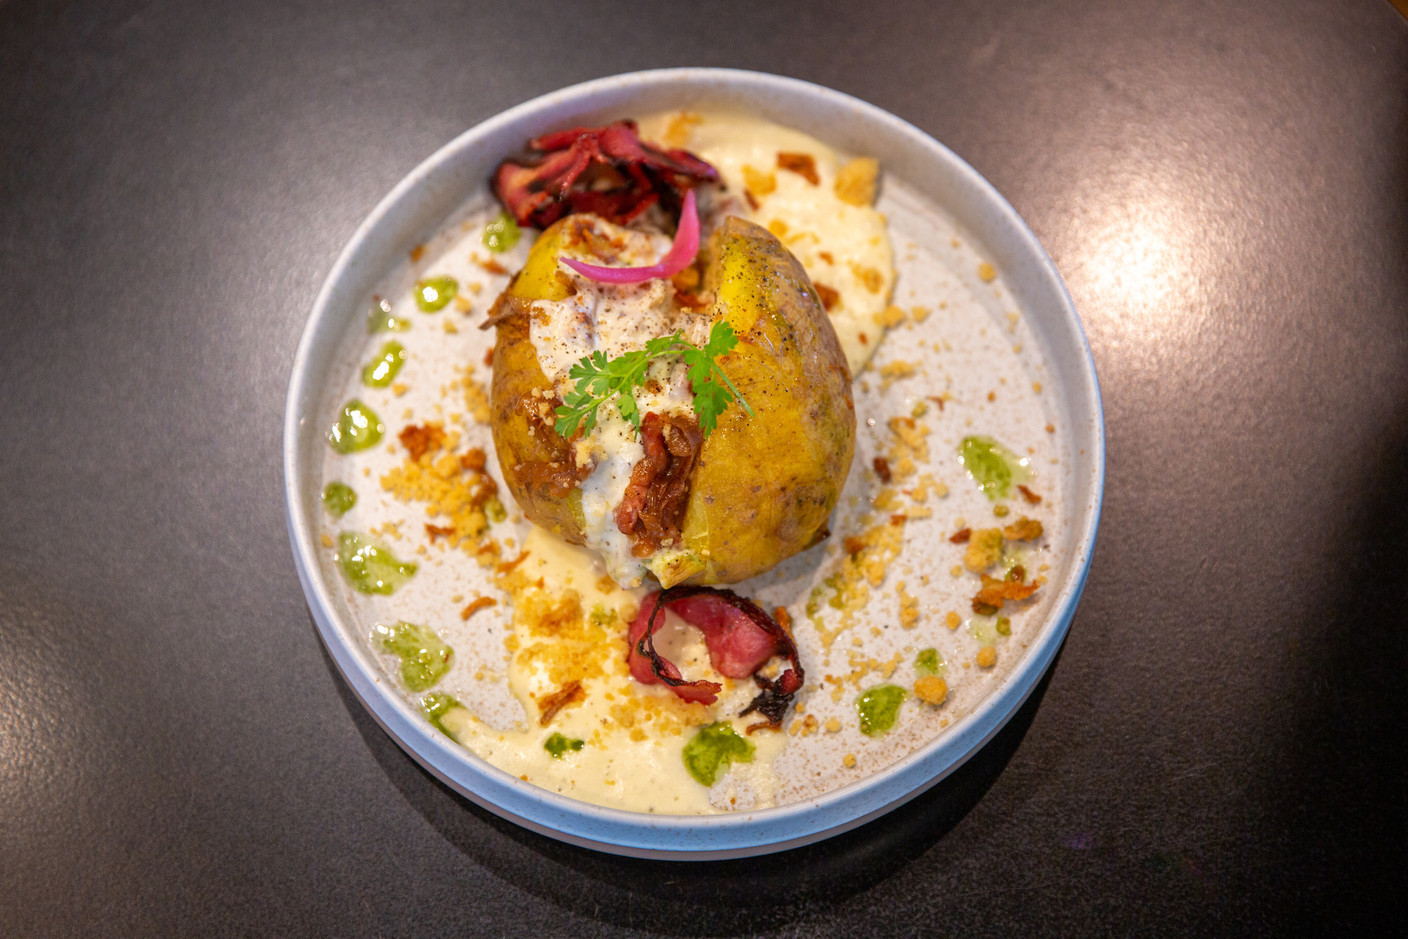 A Savoyard version of the potato with a siphon of Reblochon cheese, caramelised onions and crispy ham. (Photo: Romain Gamba/Maison Moderne)